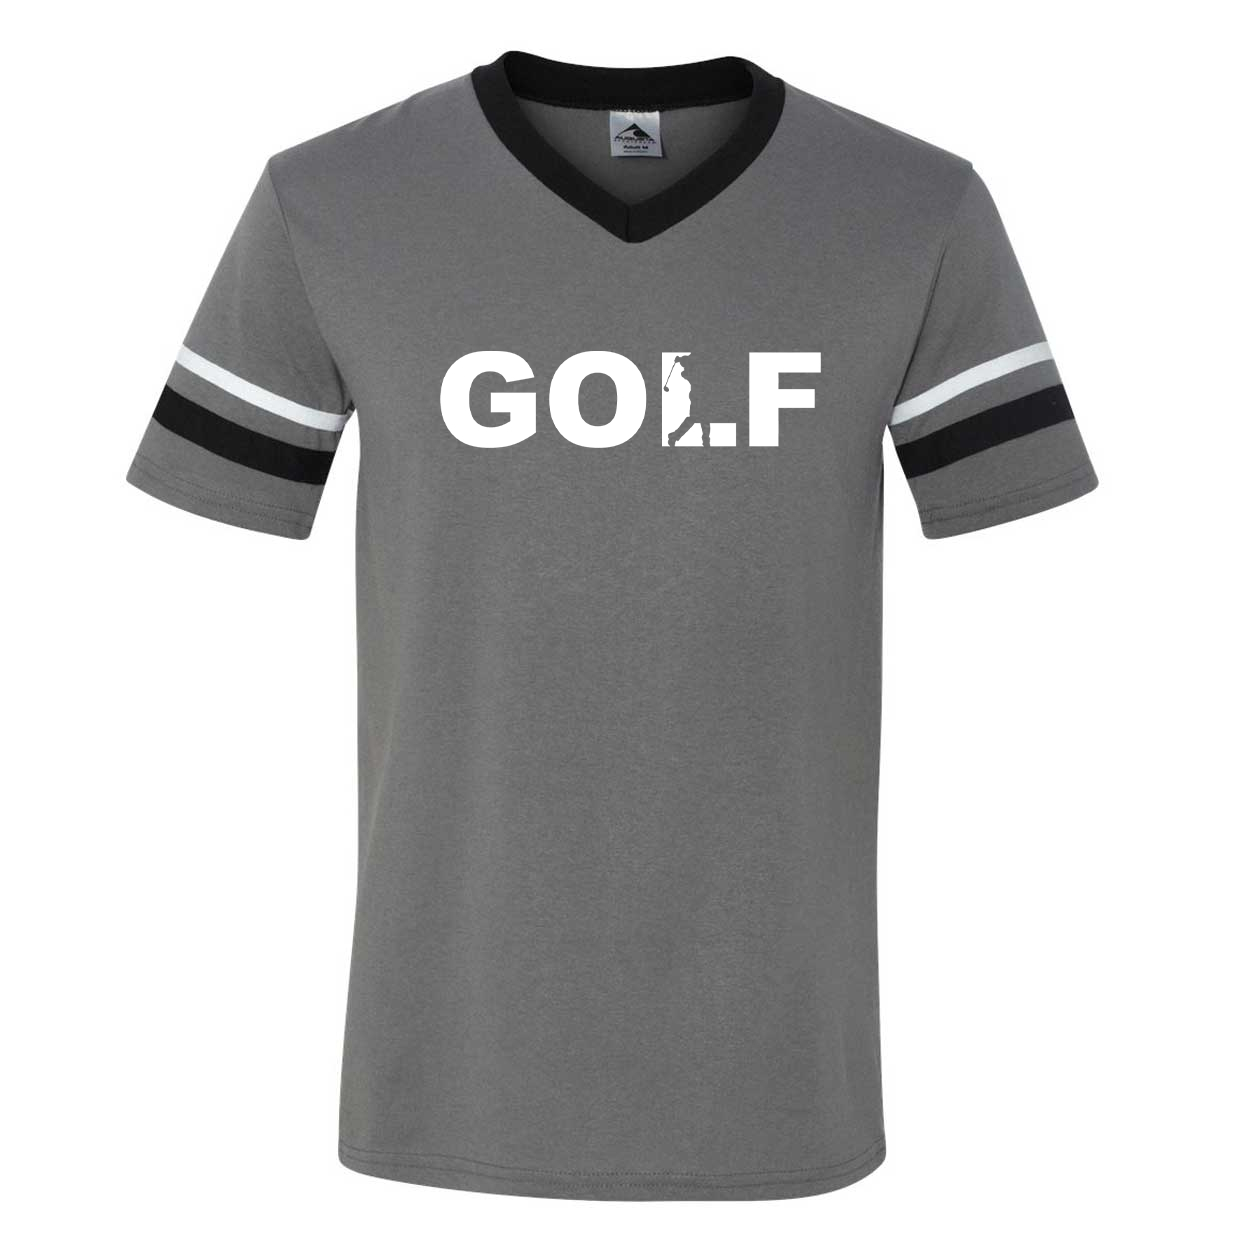 Golf Swing Logo Classic Premium Striped Jersey T-Shirt Graphite/Black/White (White Logo)